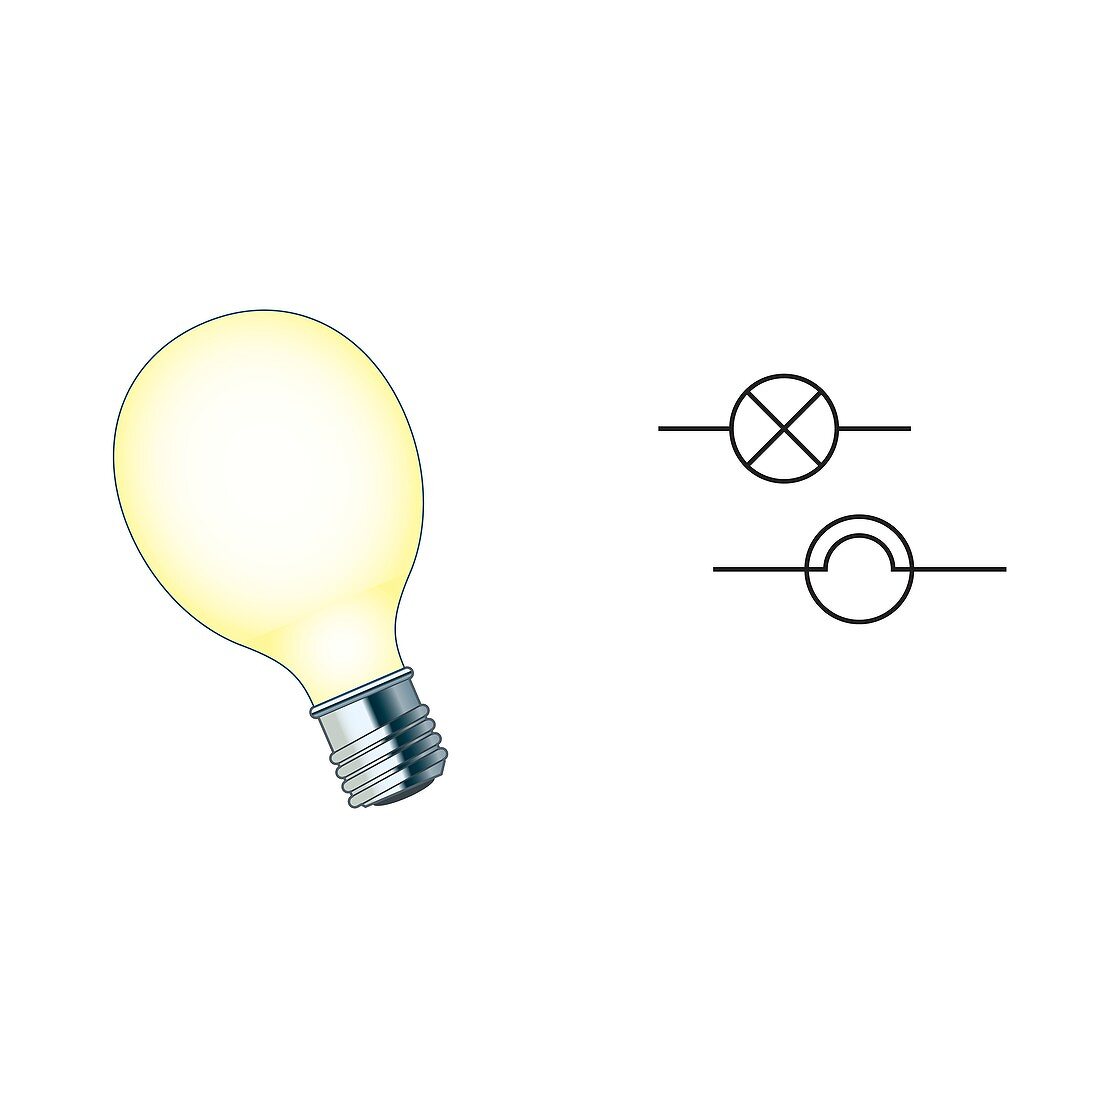 Electric lamp and circuit symbol, illustration